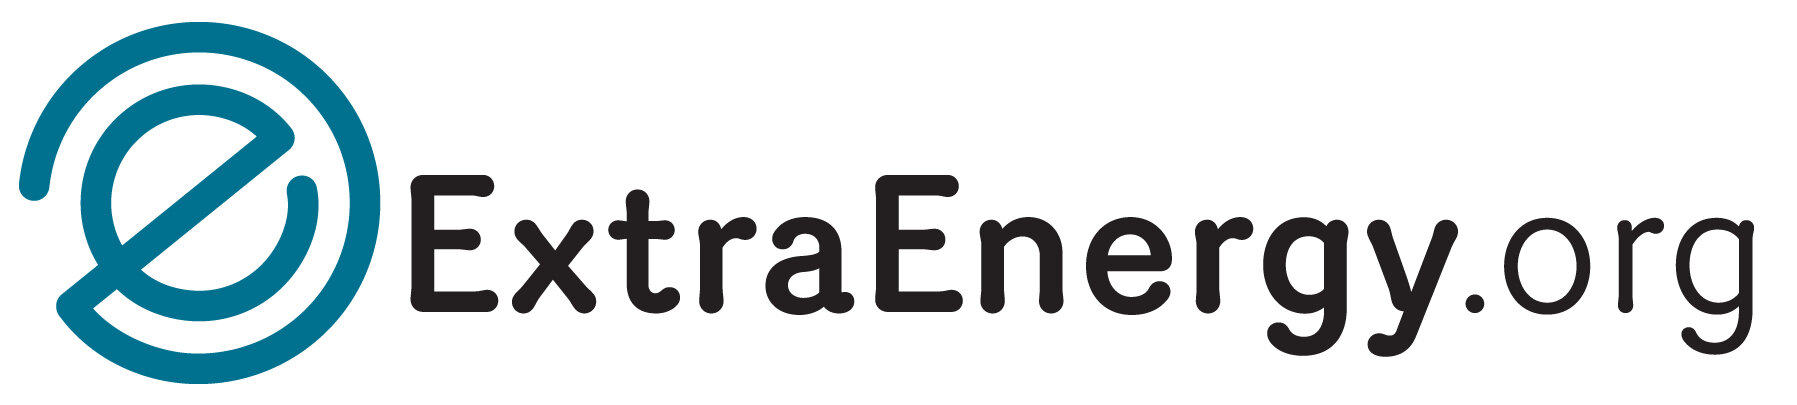 Extraenergy_logo.jpg